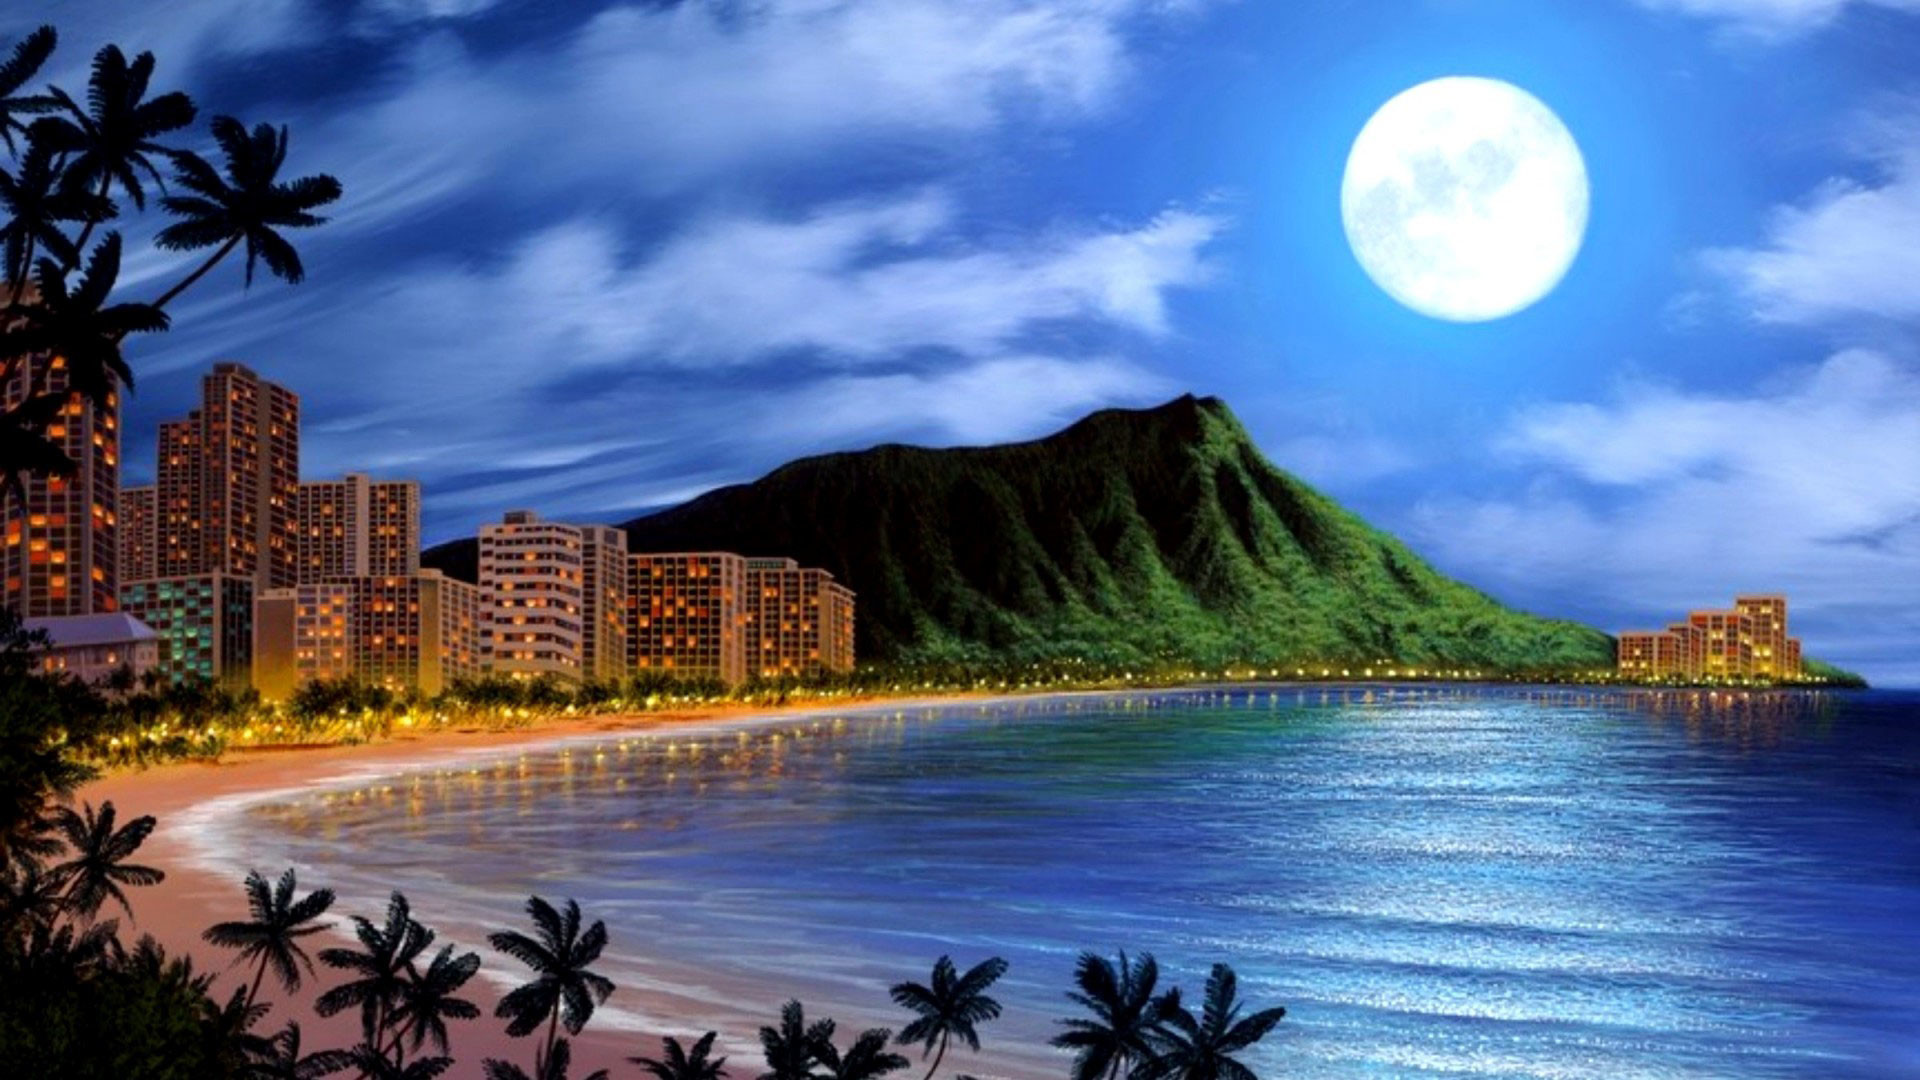 Hd Pics Photos Awesome Beach Buildings Night Sea Moon - Nice Background Screen - HD Wallpaper 